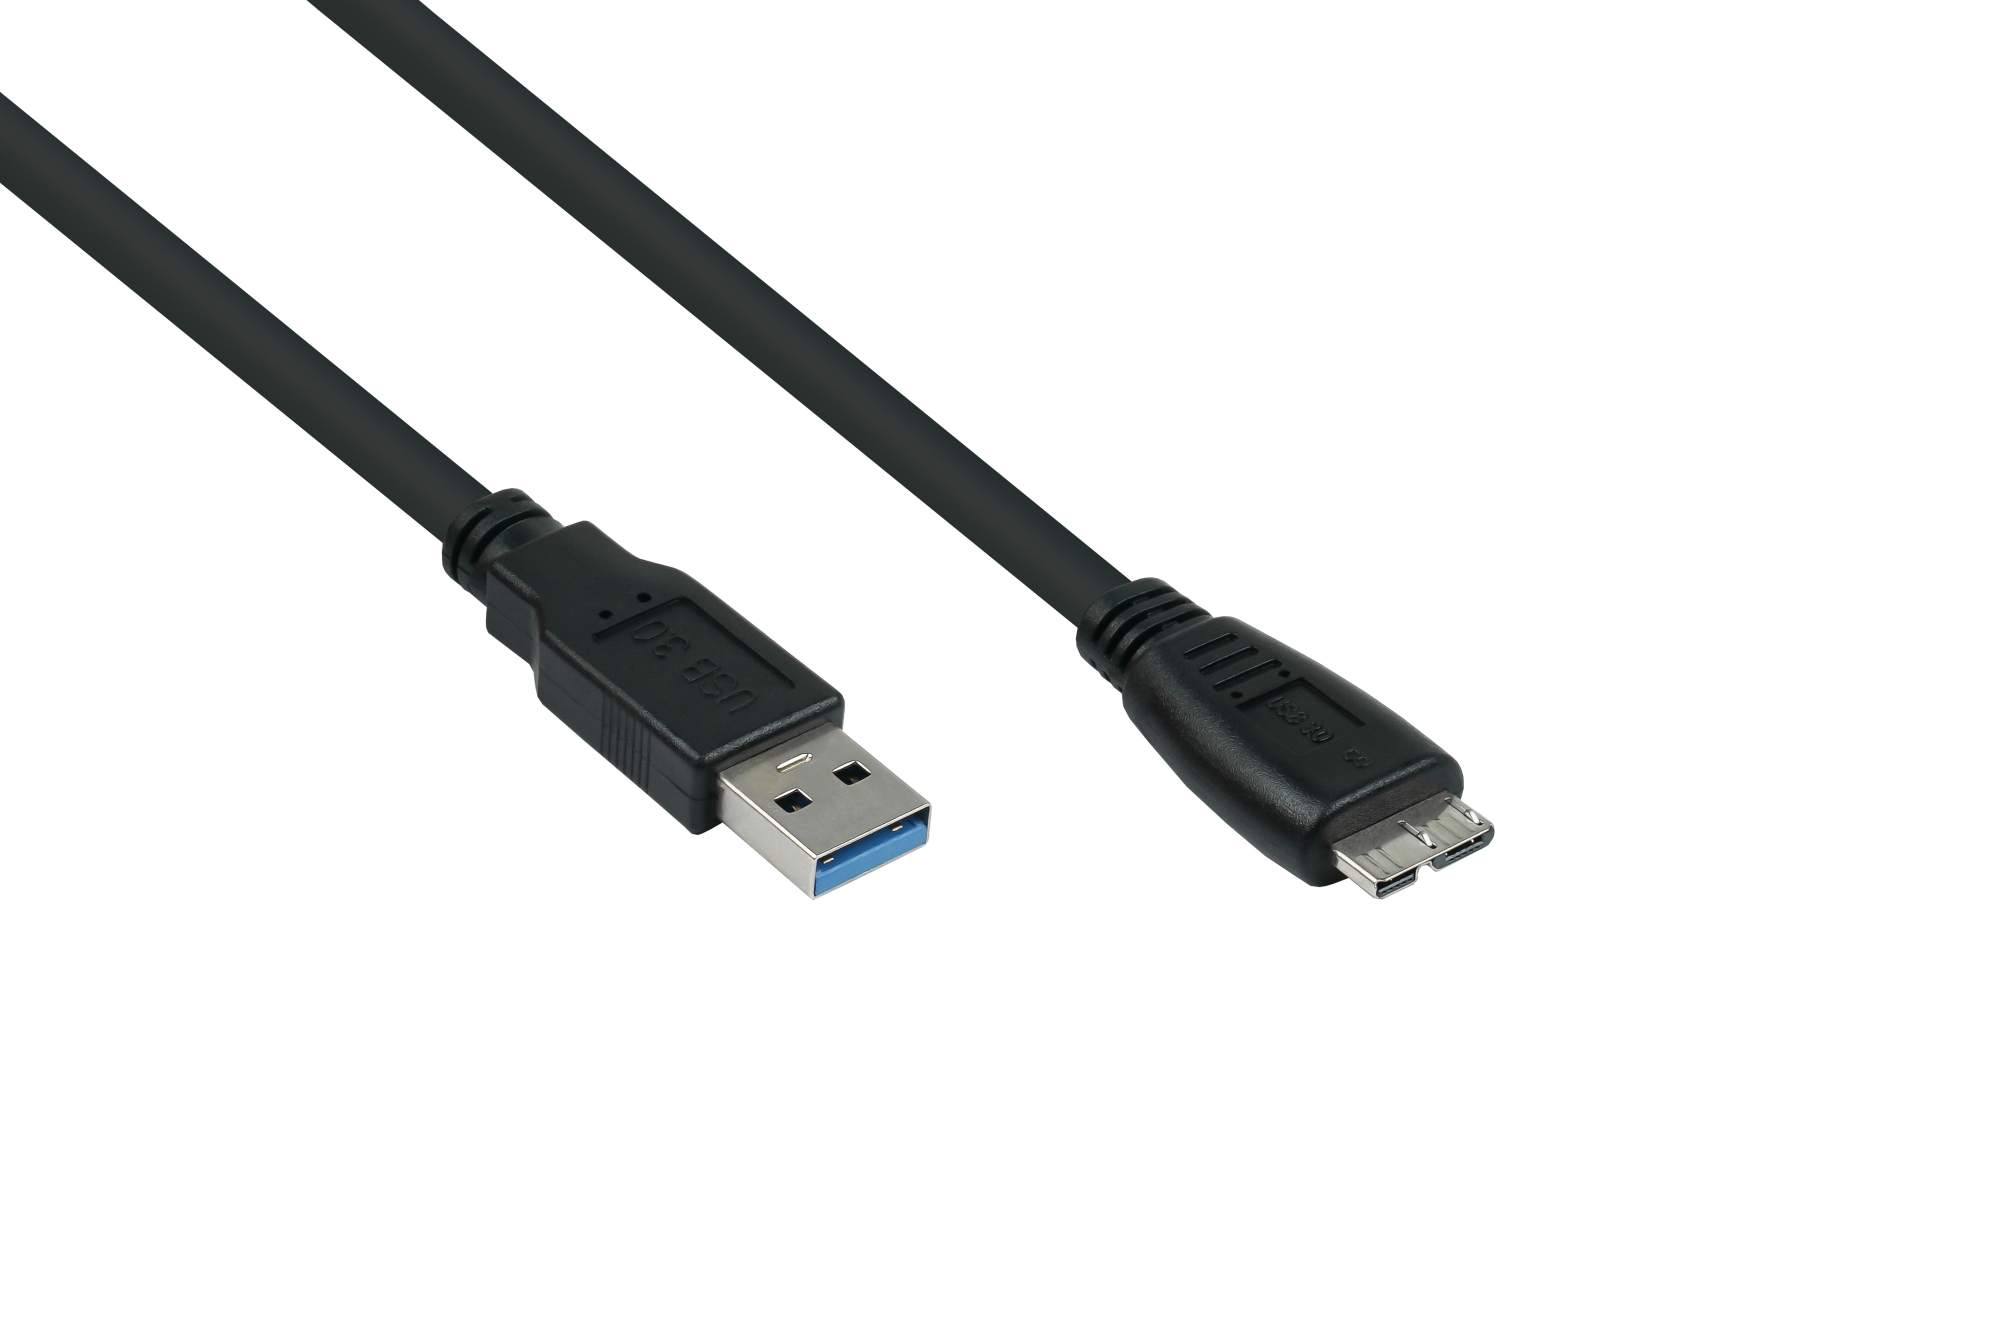 USB 3.0 Kabel Stecker A an Stecker Micro B, Premium, AWG28 / AWG24, UL, KUPFER, schwarz, 1m